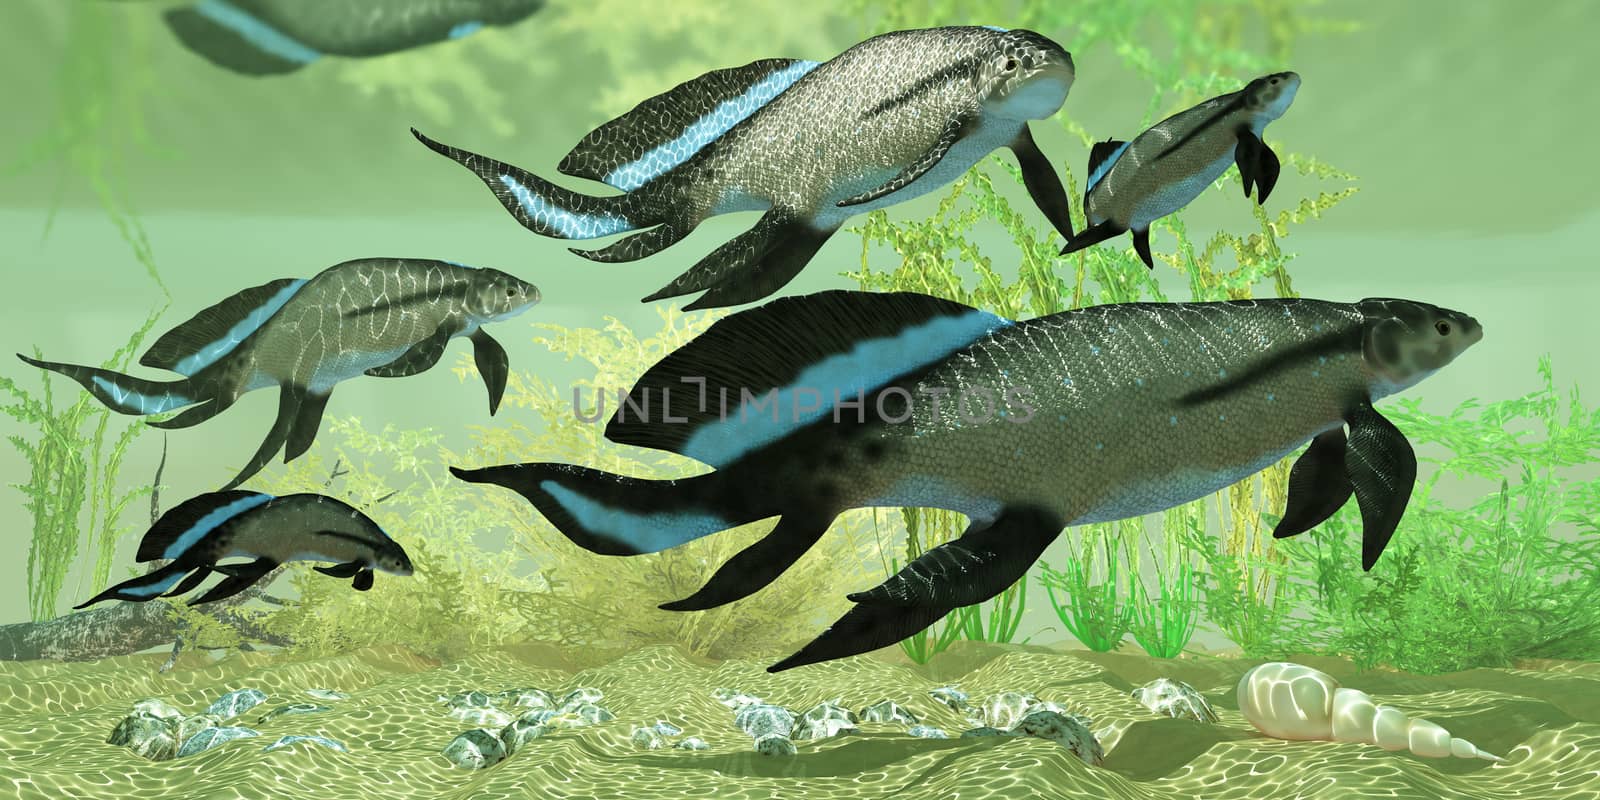 Scuamenacia is an extinct lobe-finned fish from Quebec, Canada in the Upper Devonian Era.